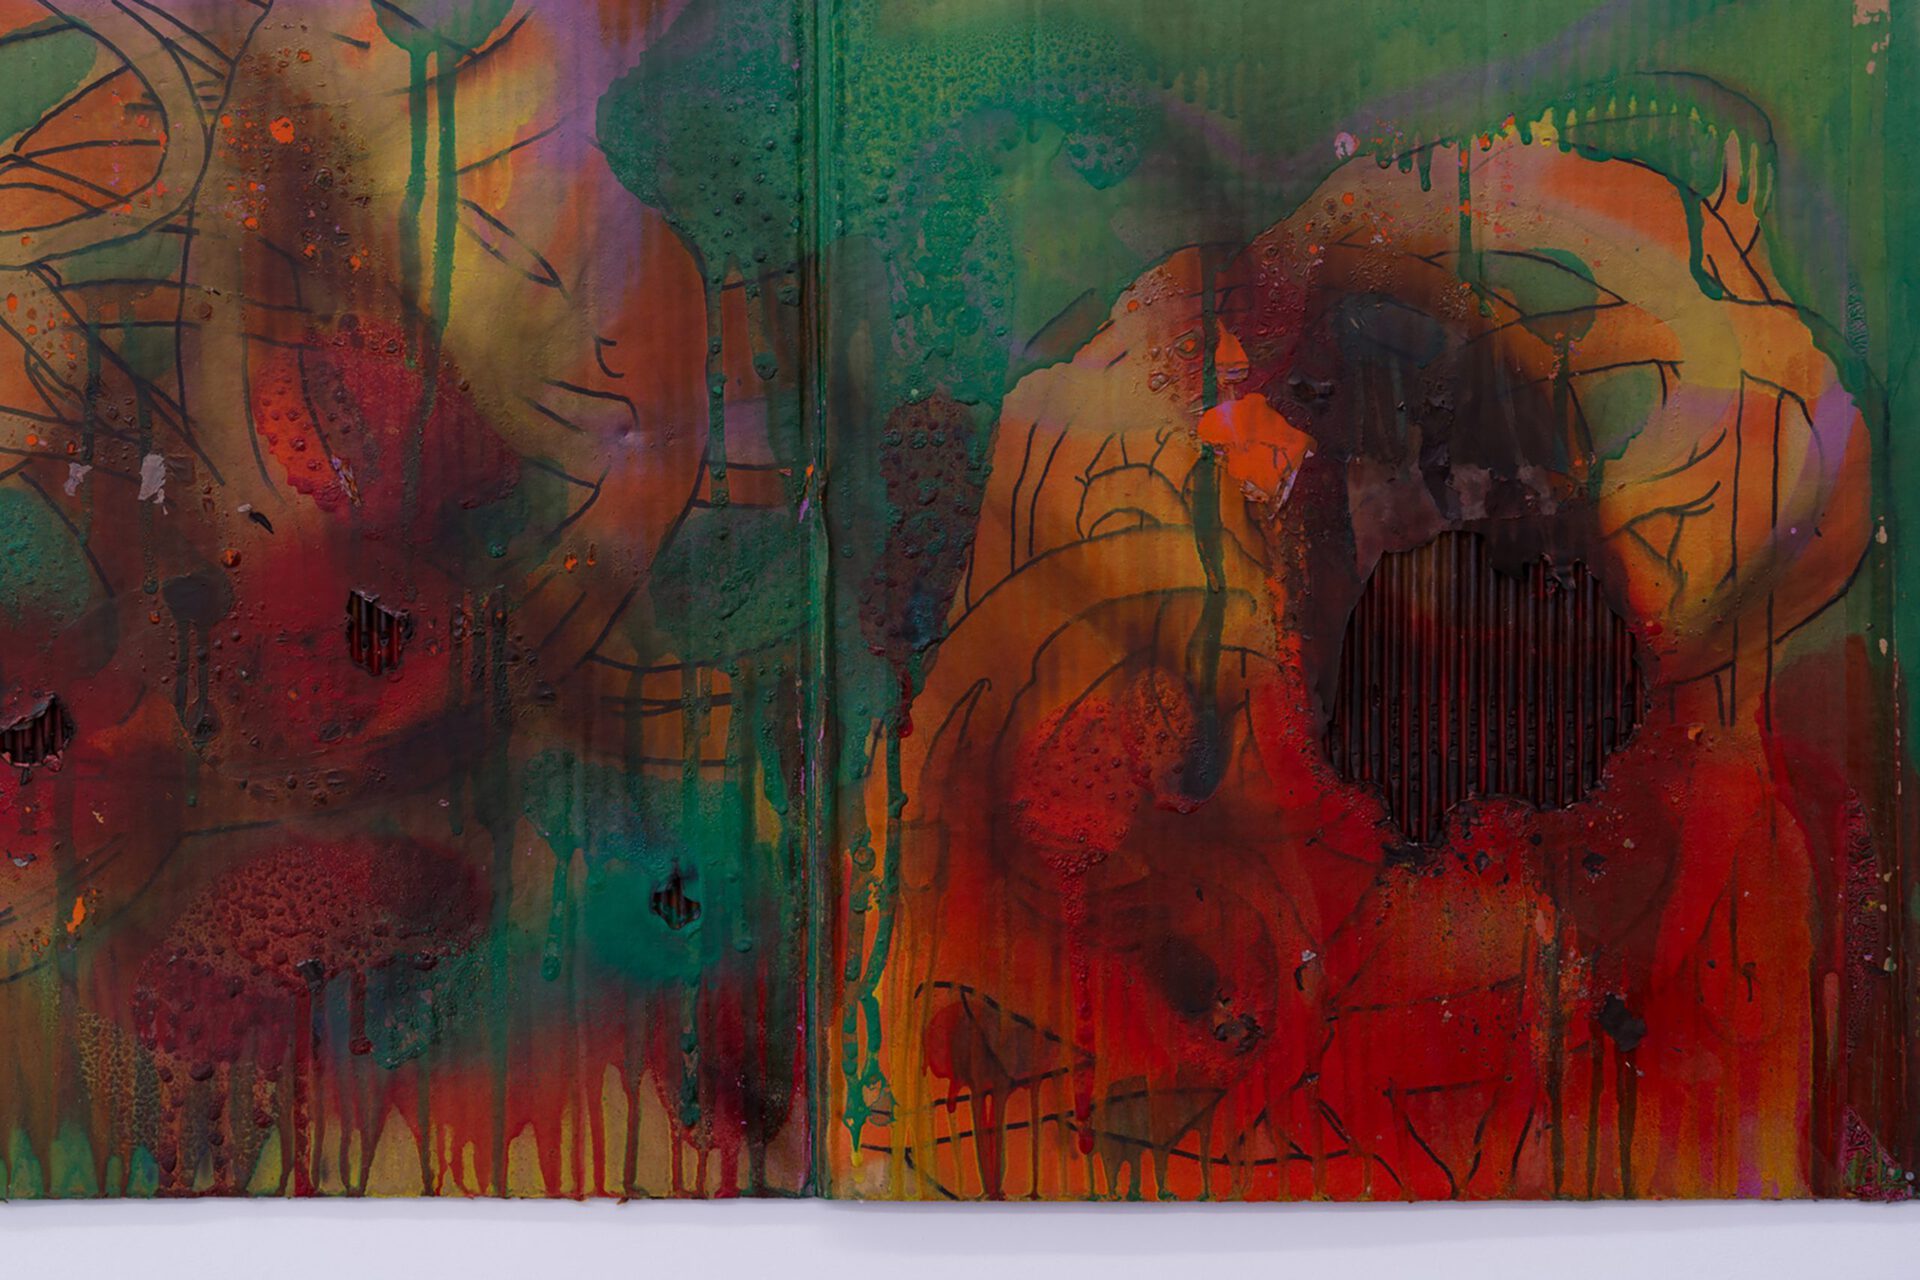 Arthur Golyakov, ‘Aquarium’, 2011-2012, corrugated board, enamel, spray paint, solvent, marker, 149 x 41 cm, details